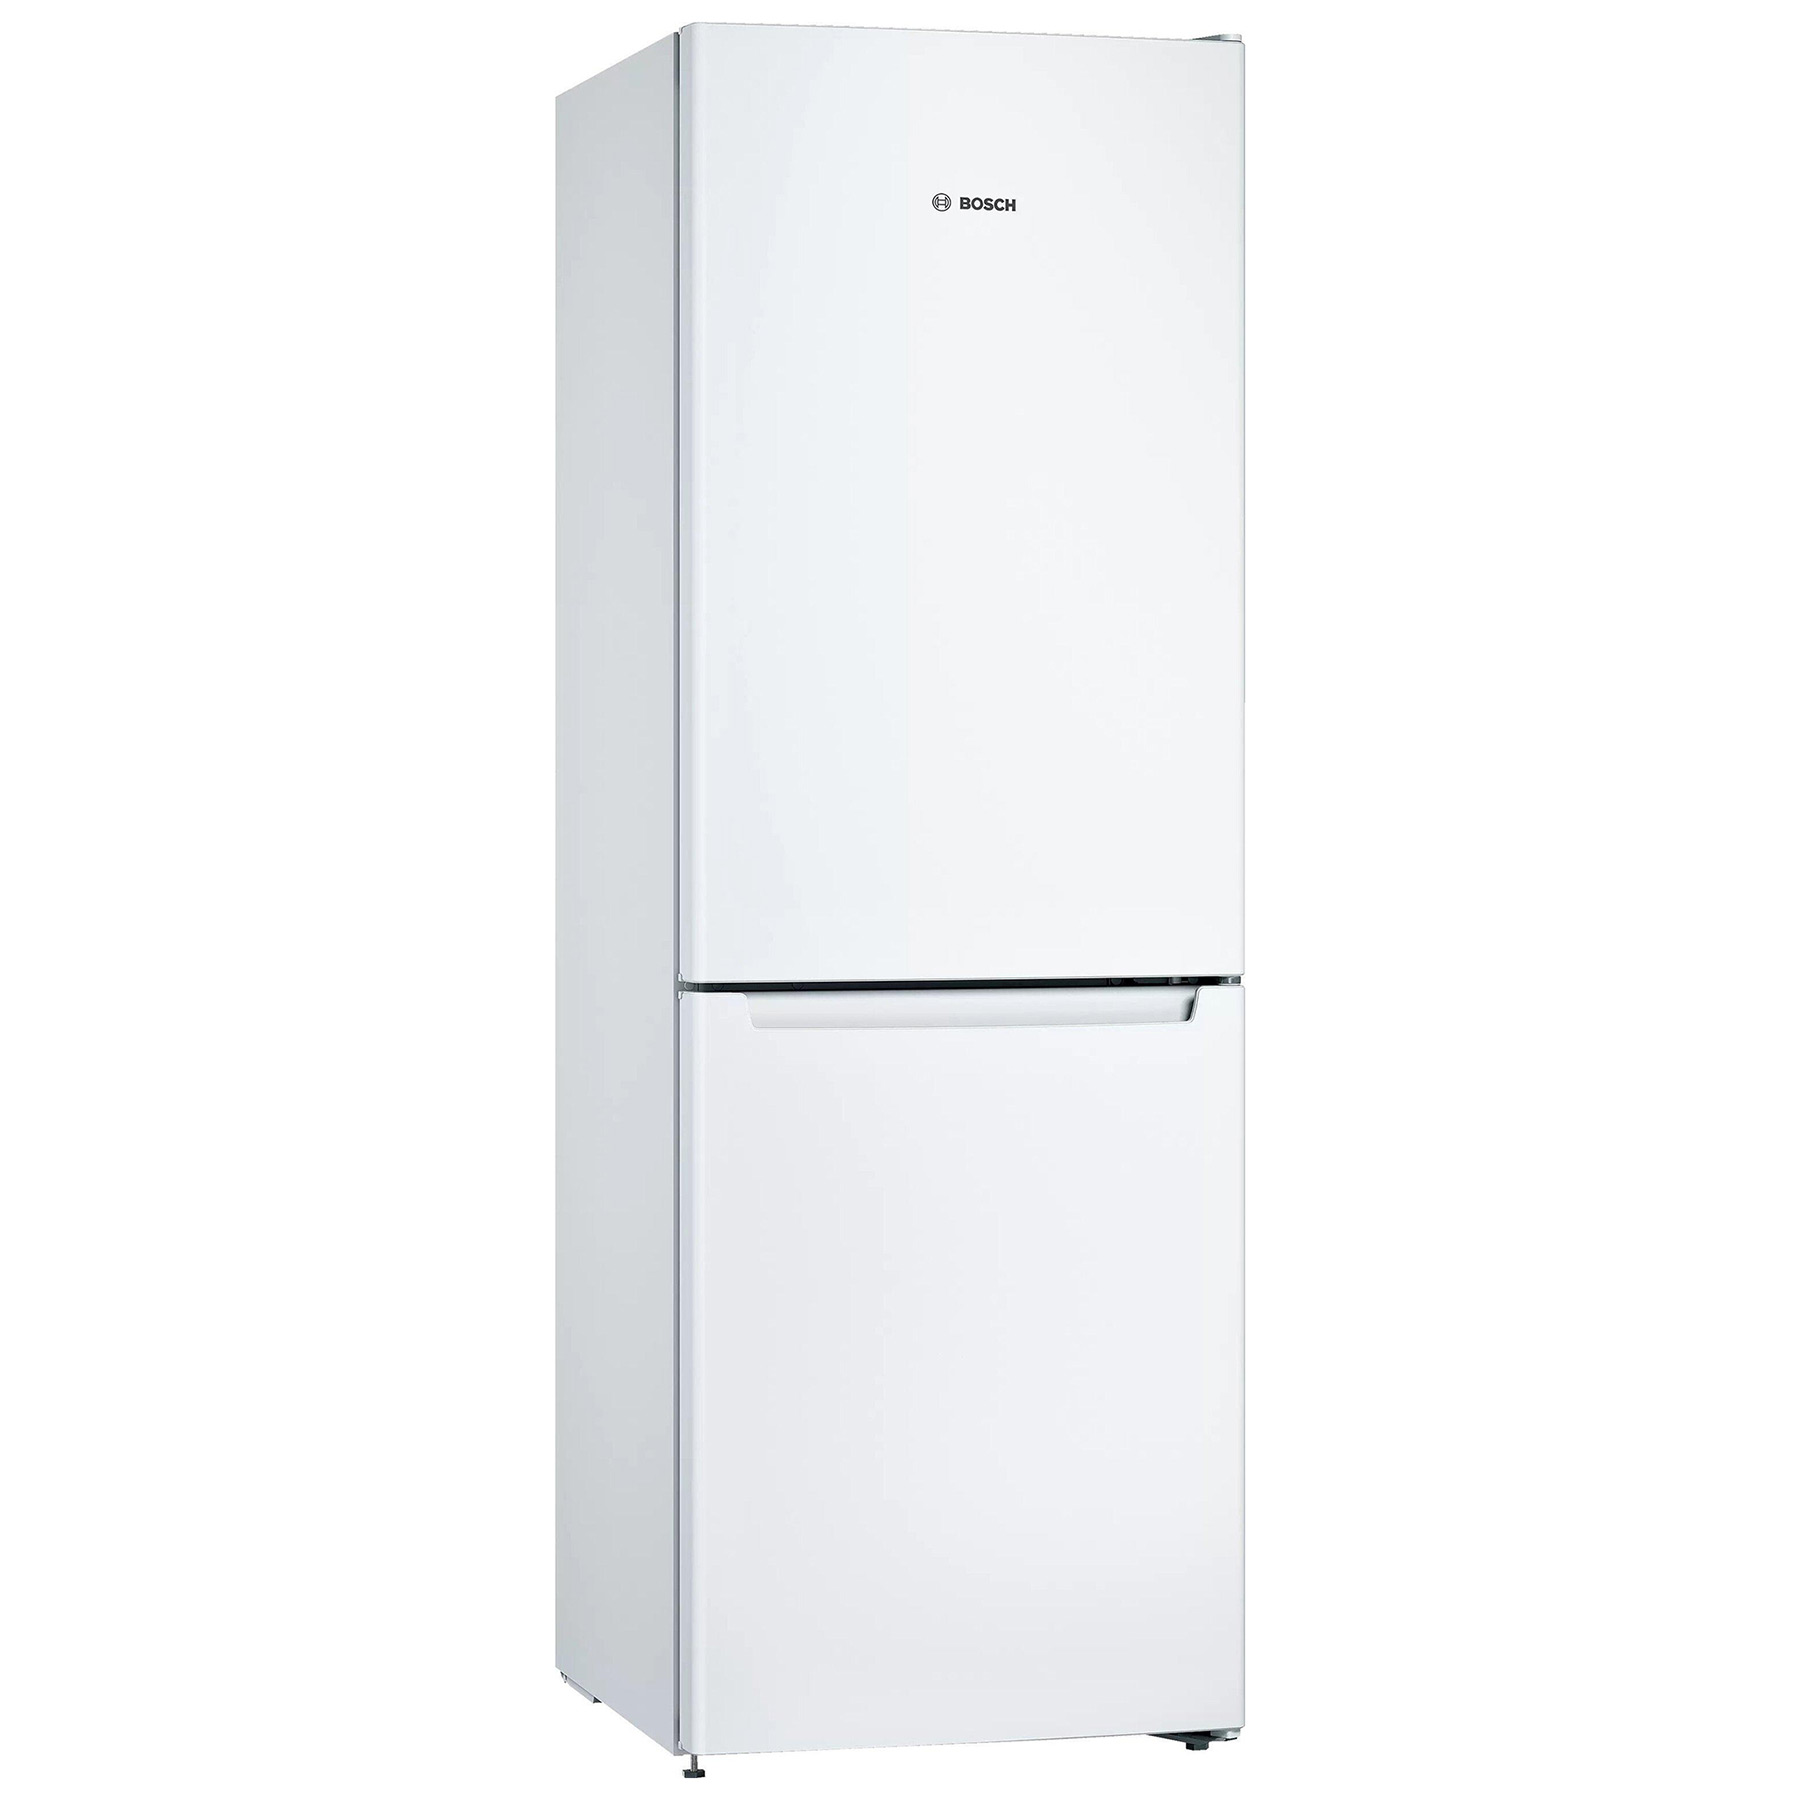 Image of Bosch KGN33NWEAG Series 2 60cm Frost Free Fridge Freezer White 1 76m E